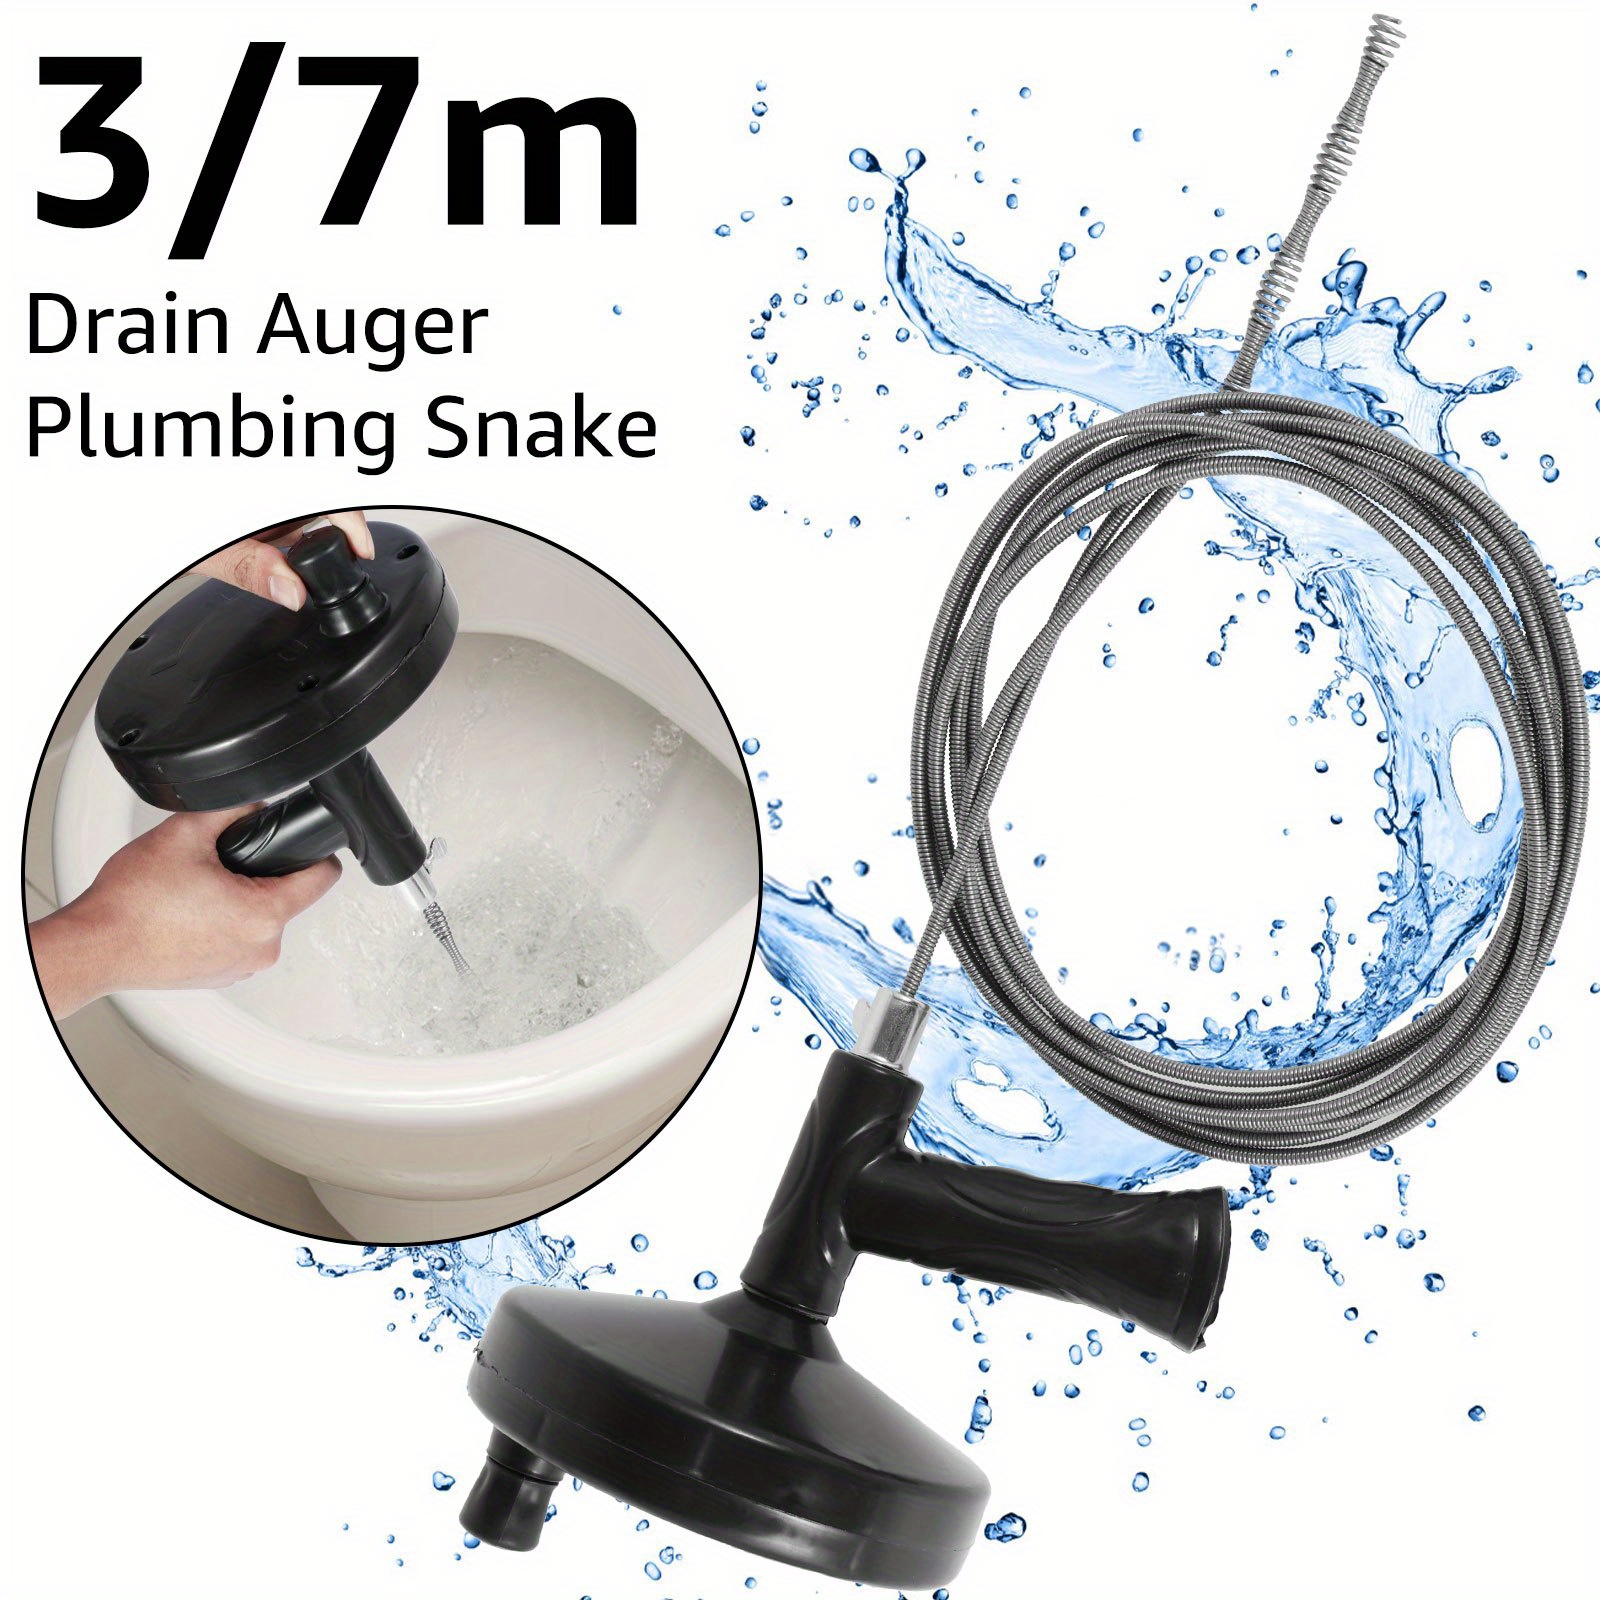 Plumbing Snake Drain Auger Manual Snake Drain Clog Remover